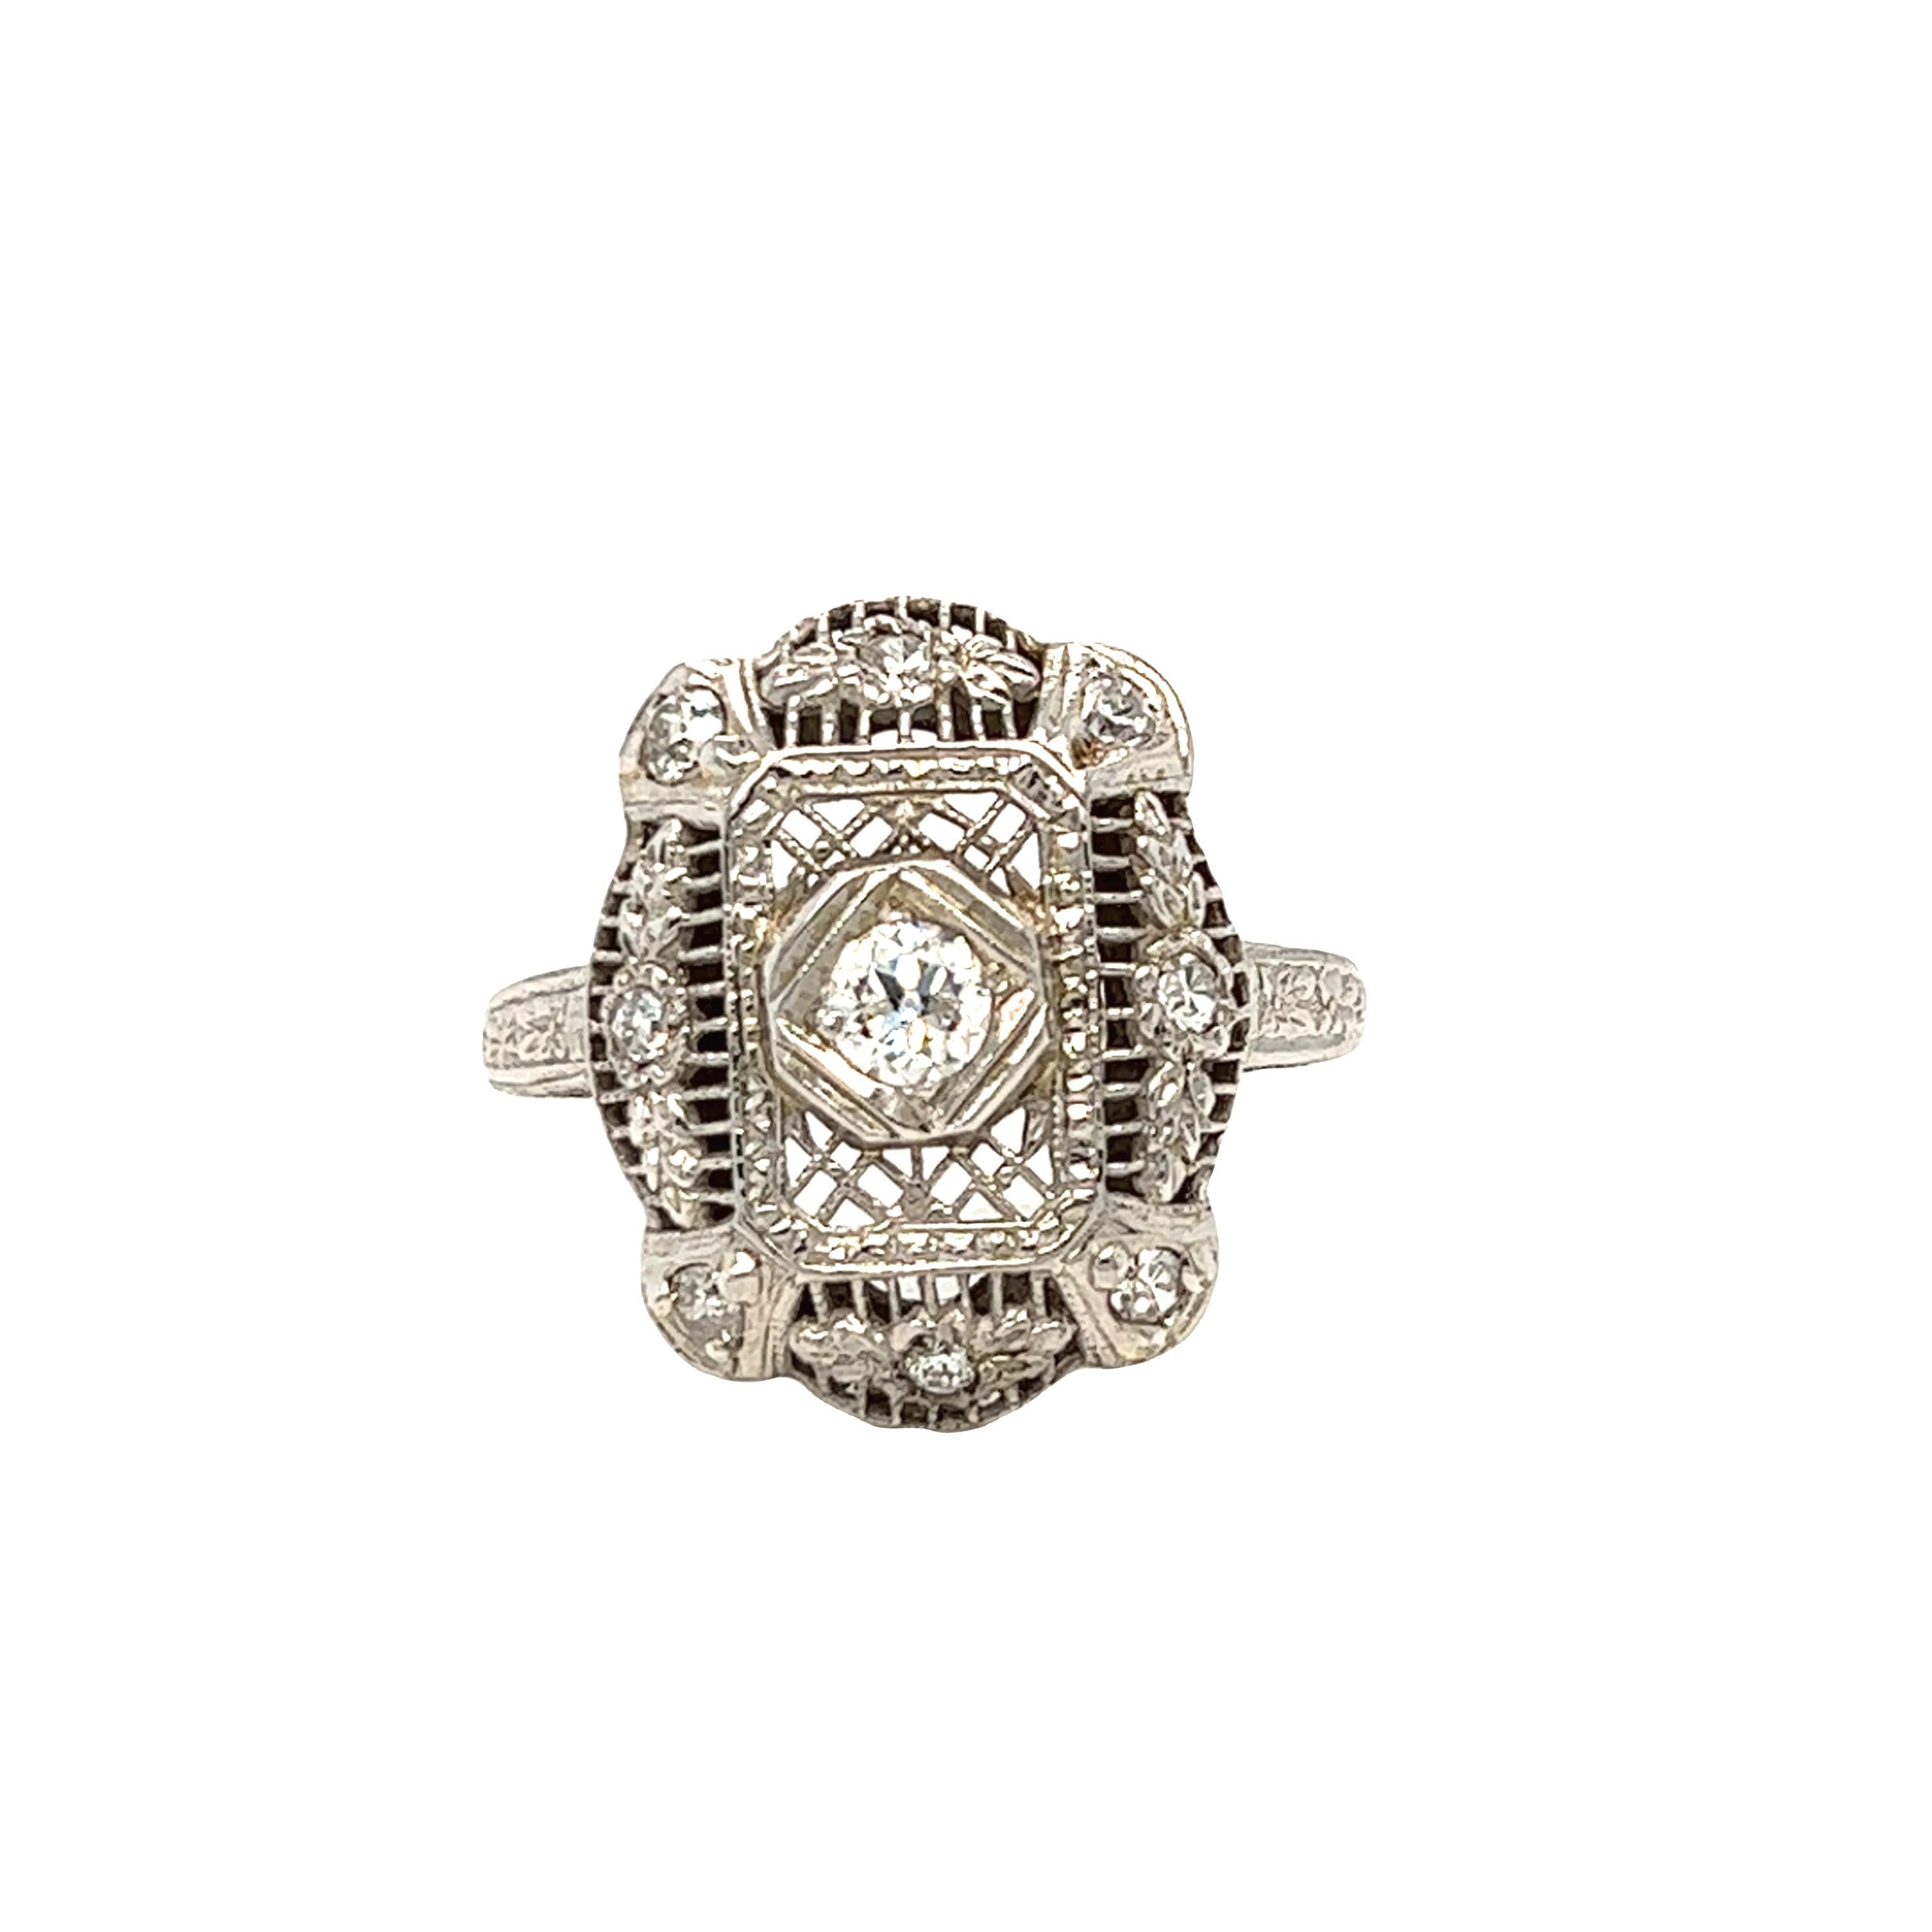 Edwardian Era Diamond Ring 18K White Gold For Sale 4